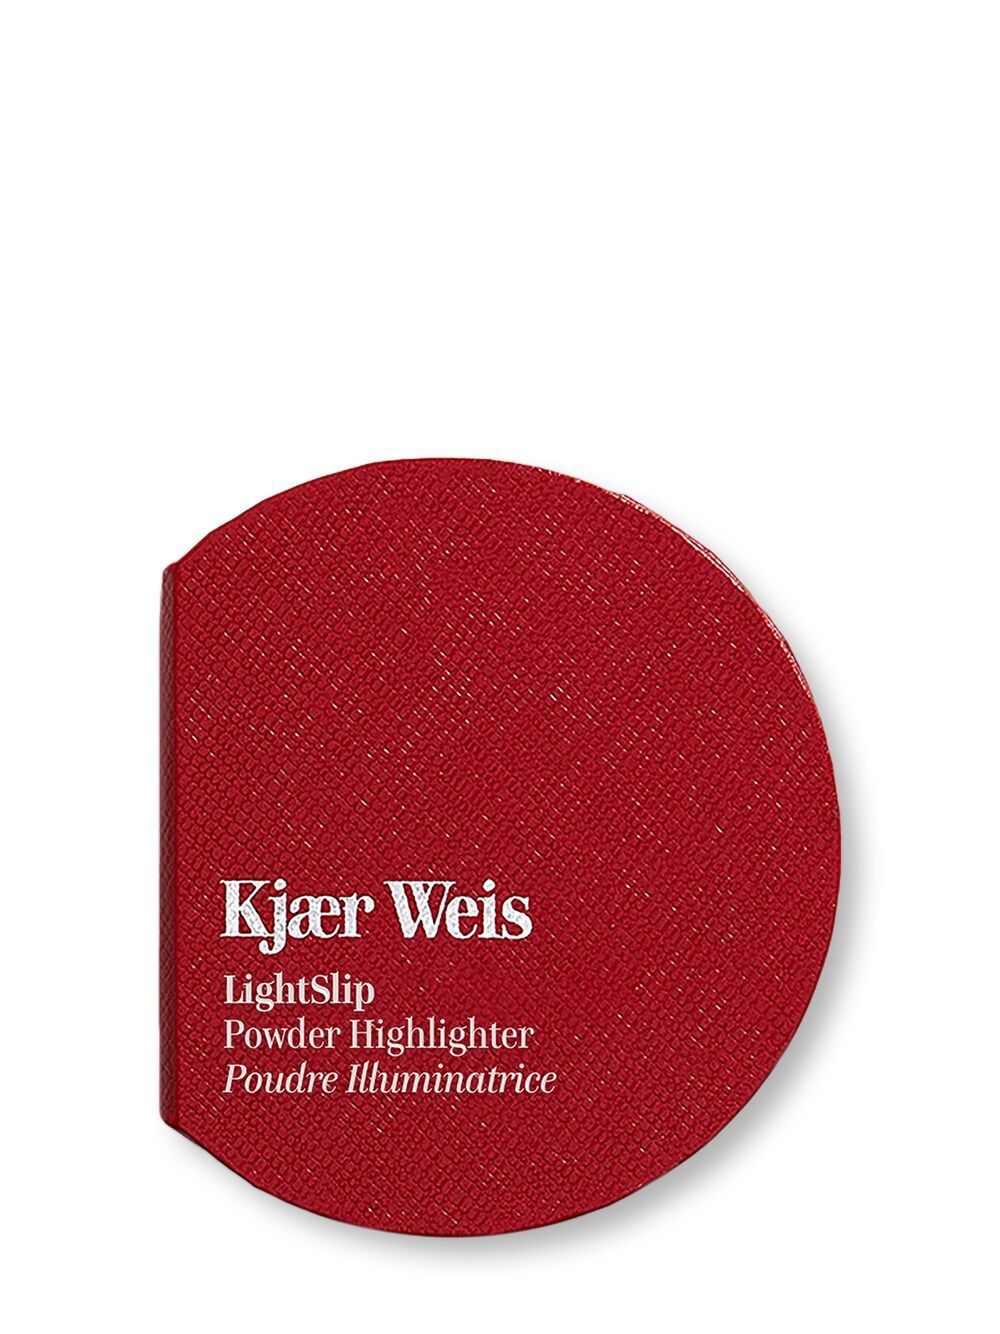 Kjaer Weis Red Edition Powder Highlighter Case